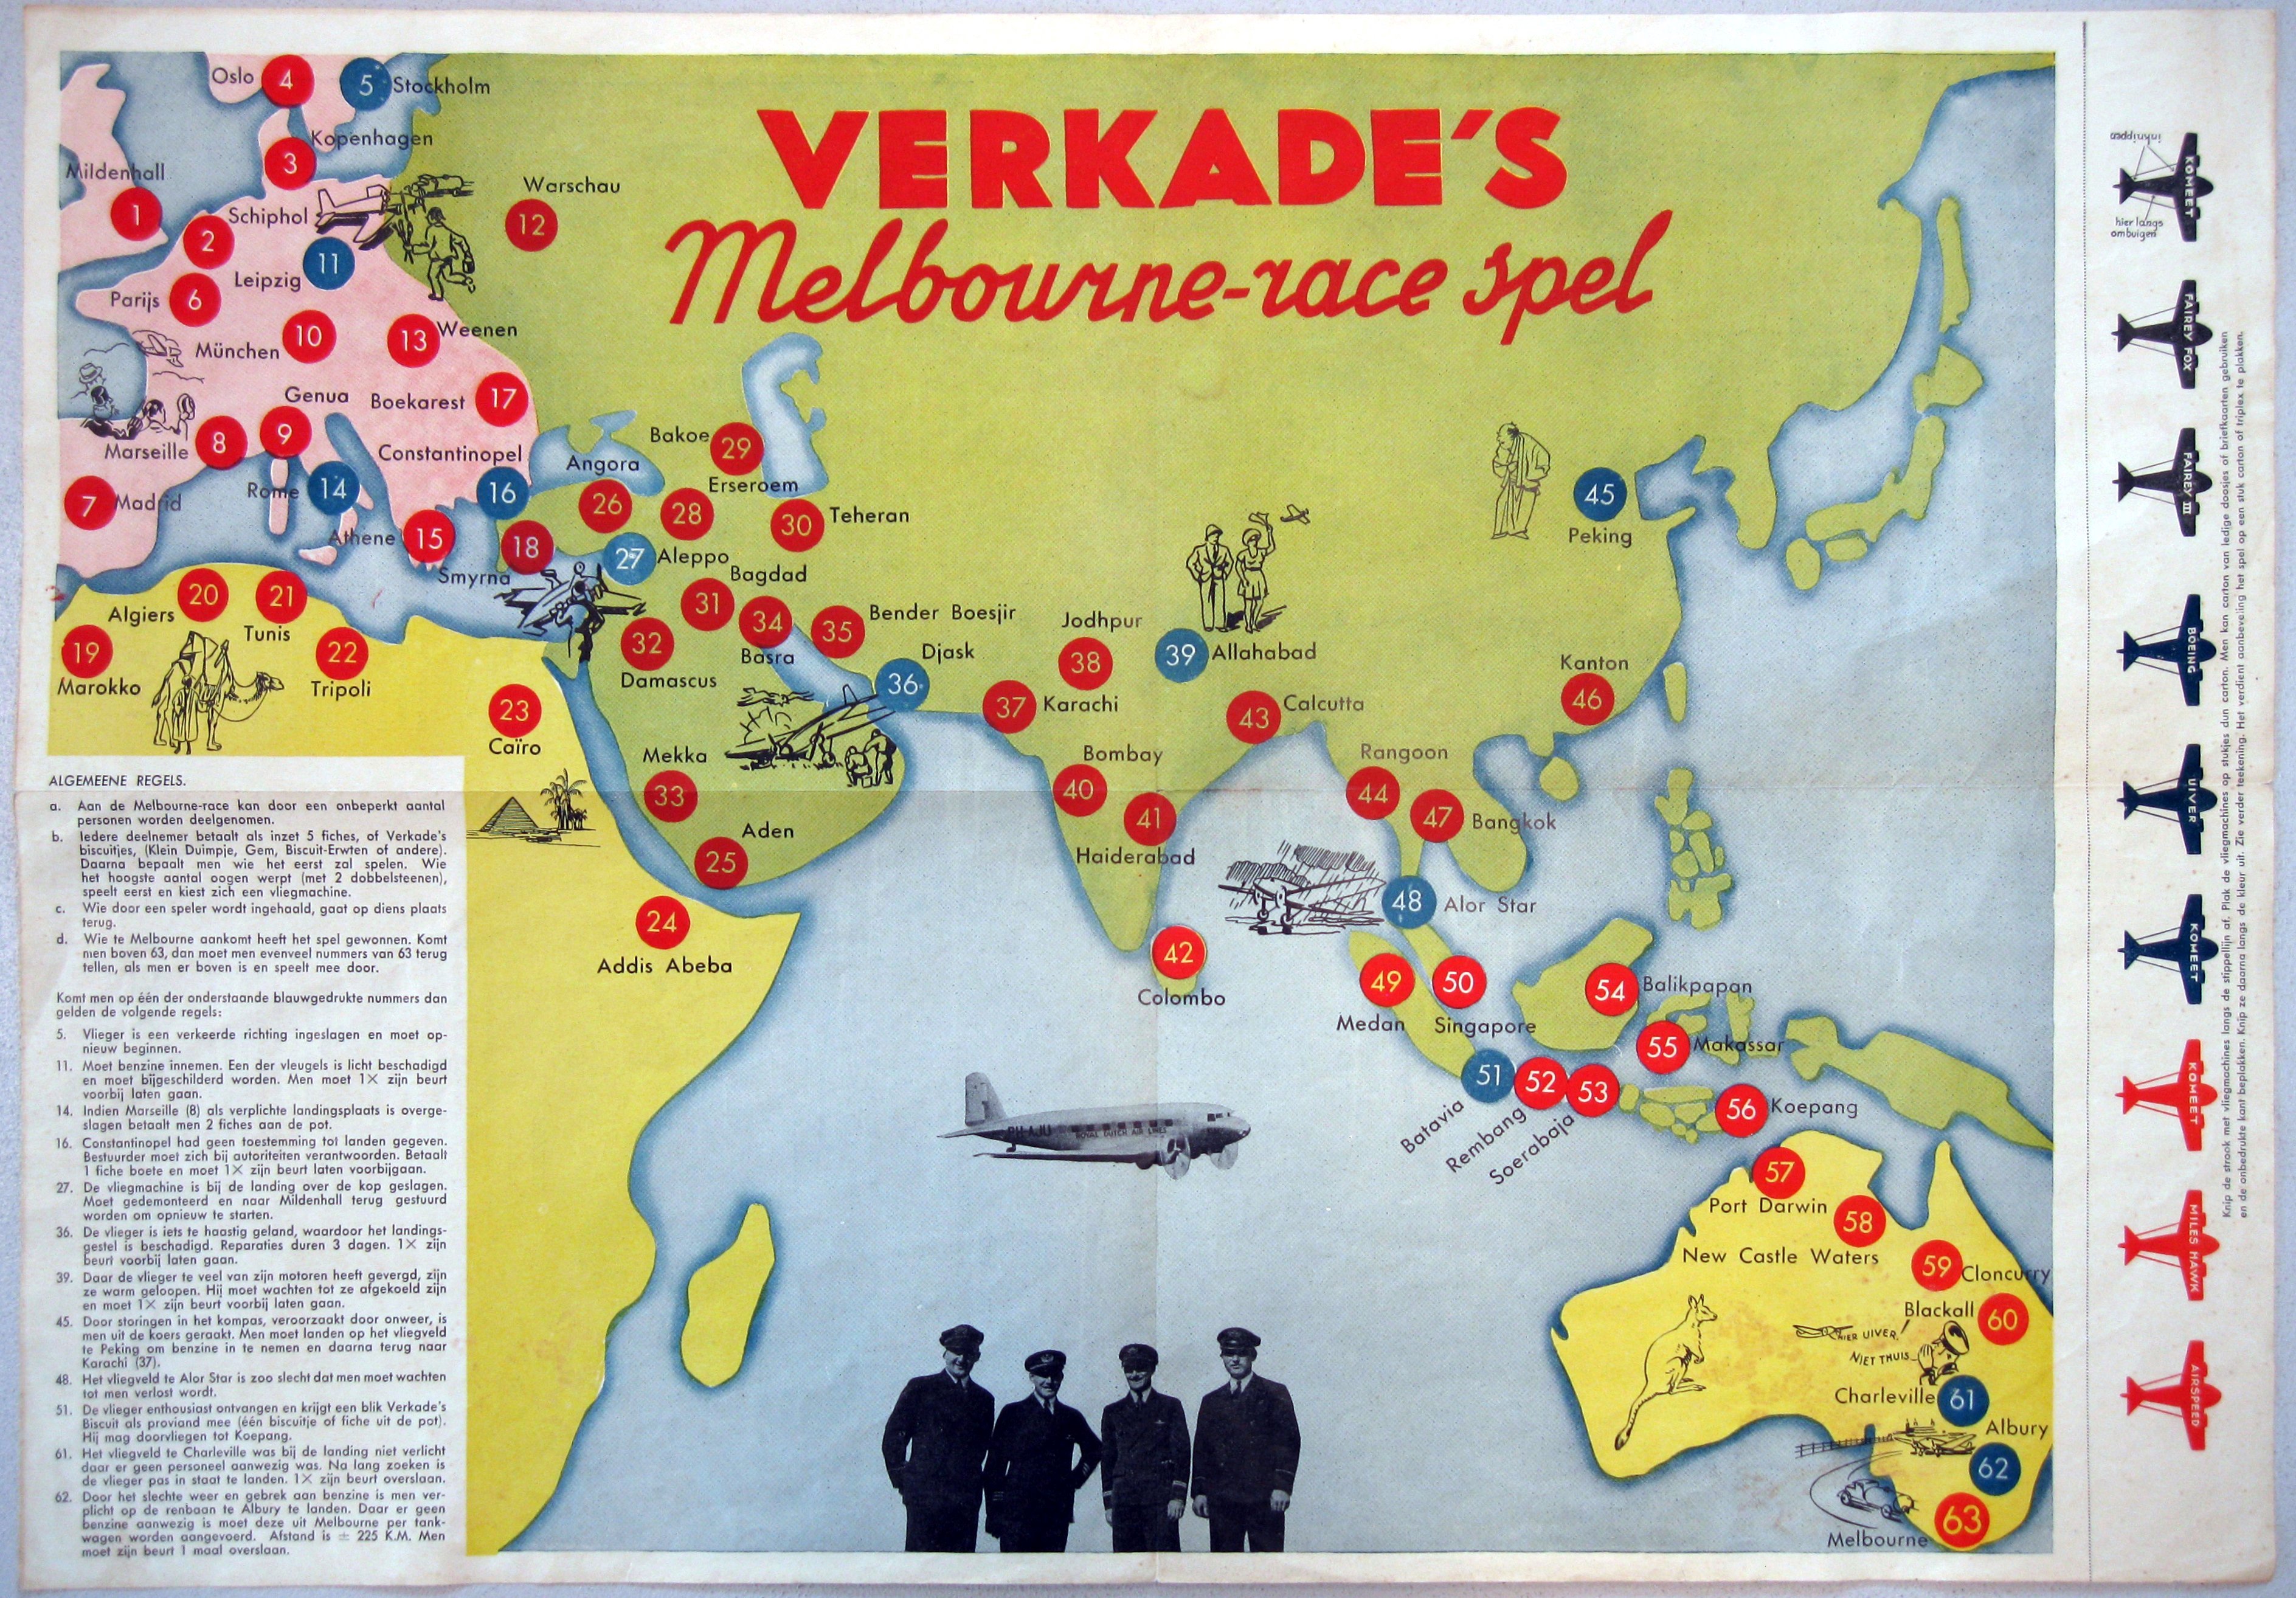 Verkade's Melbourne-Race Spel